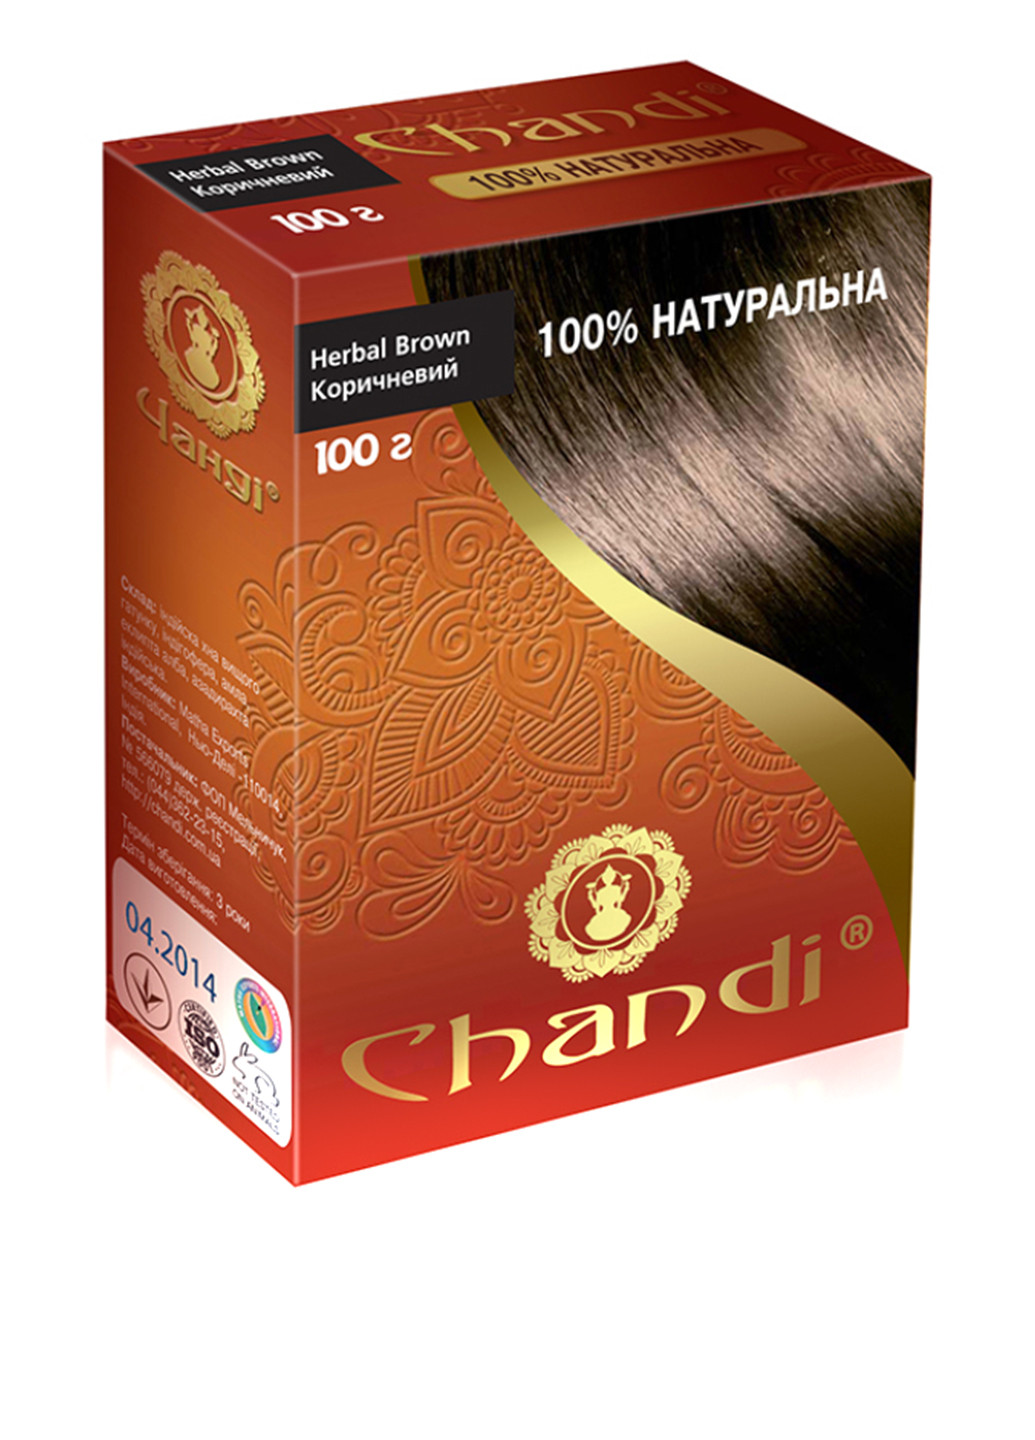 Лечебная краска для волос "100% Натуральная" Коричневый/Brown Chandi (88092733)